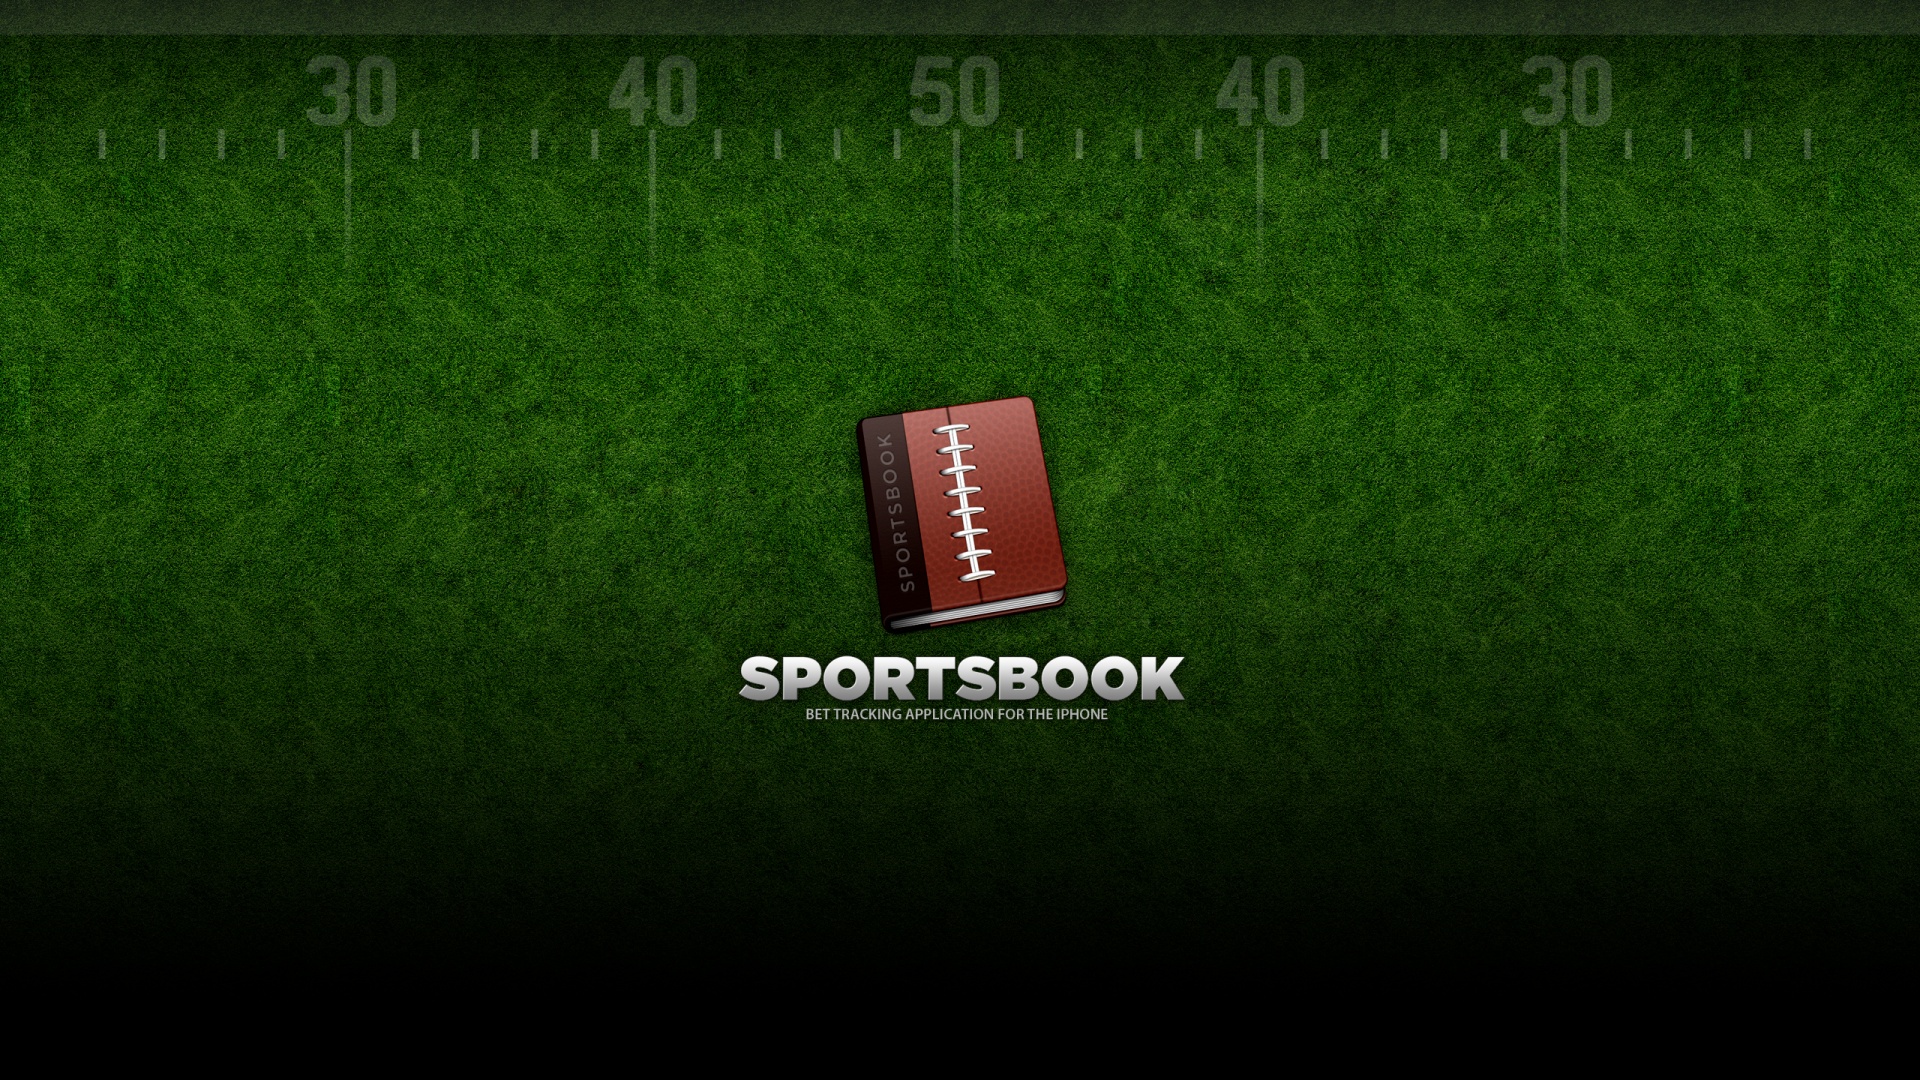 Sportsbook Desktop Pc And Mac Wallpaper